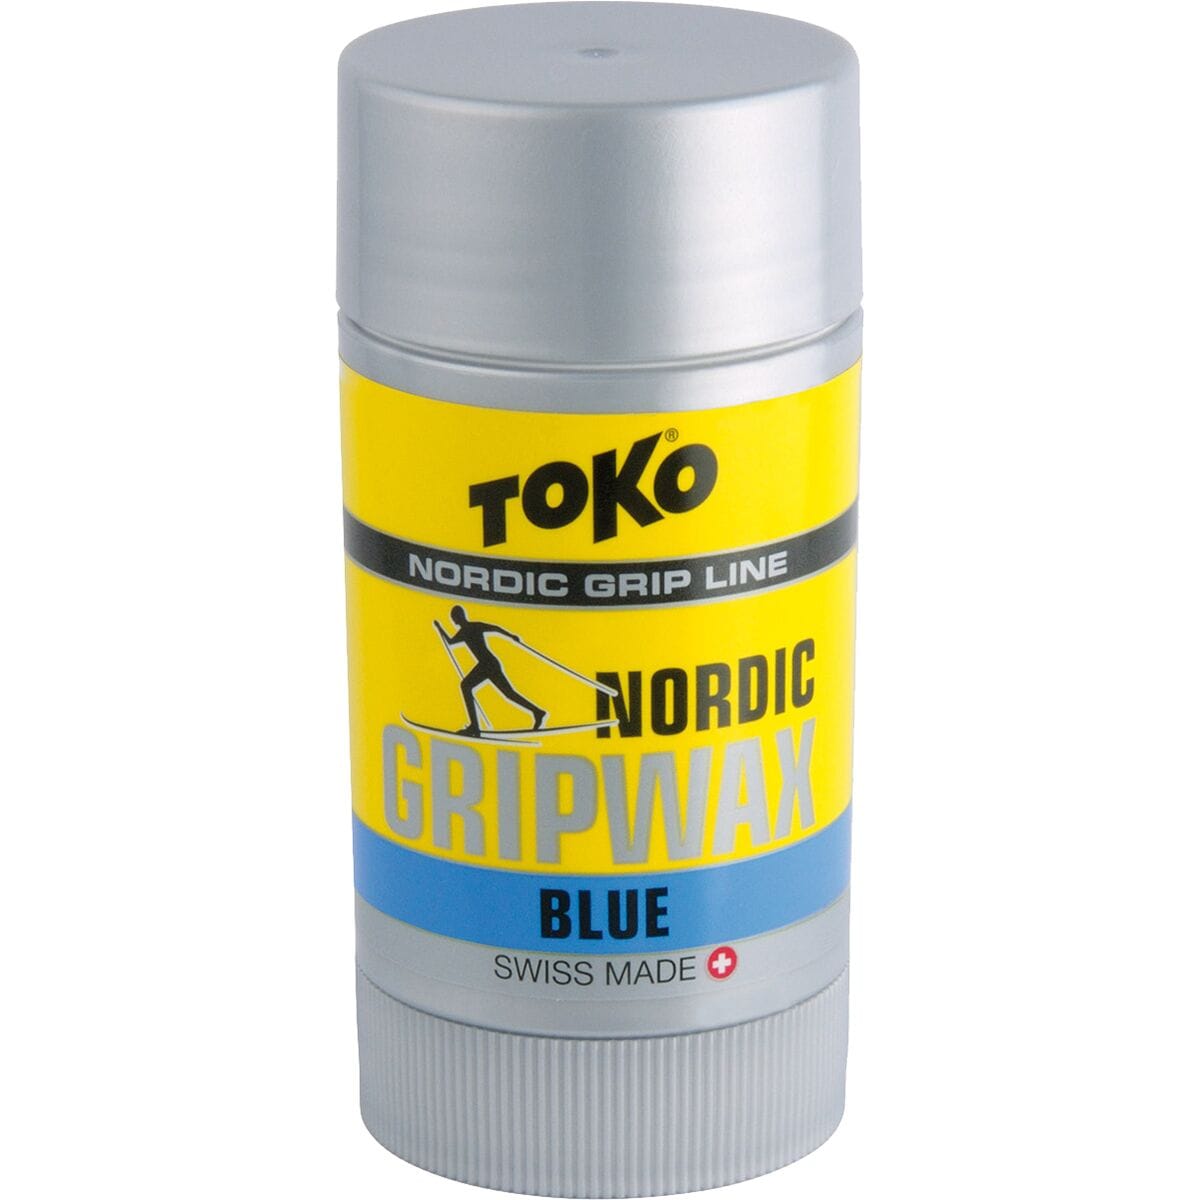 Toko Nordic Grip Wax Blue